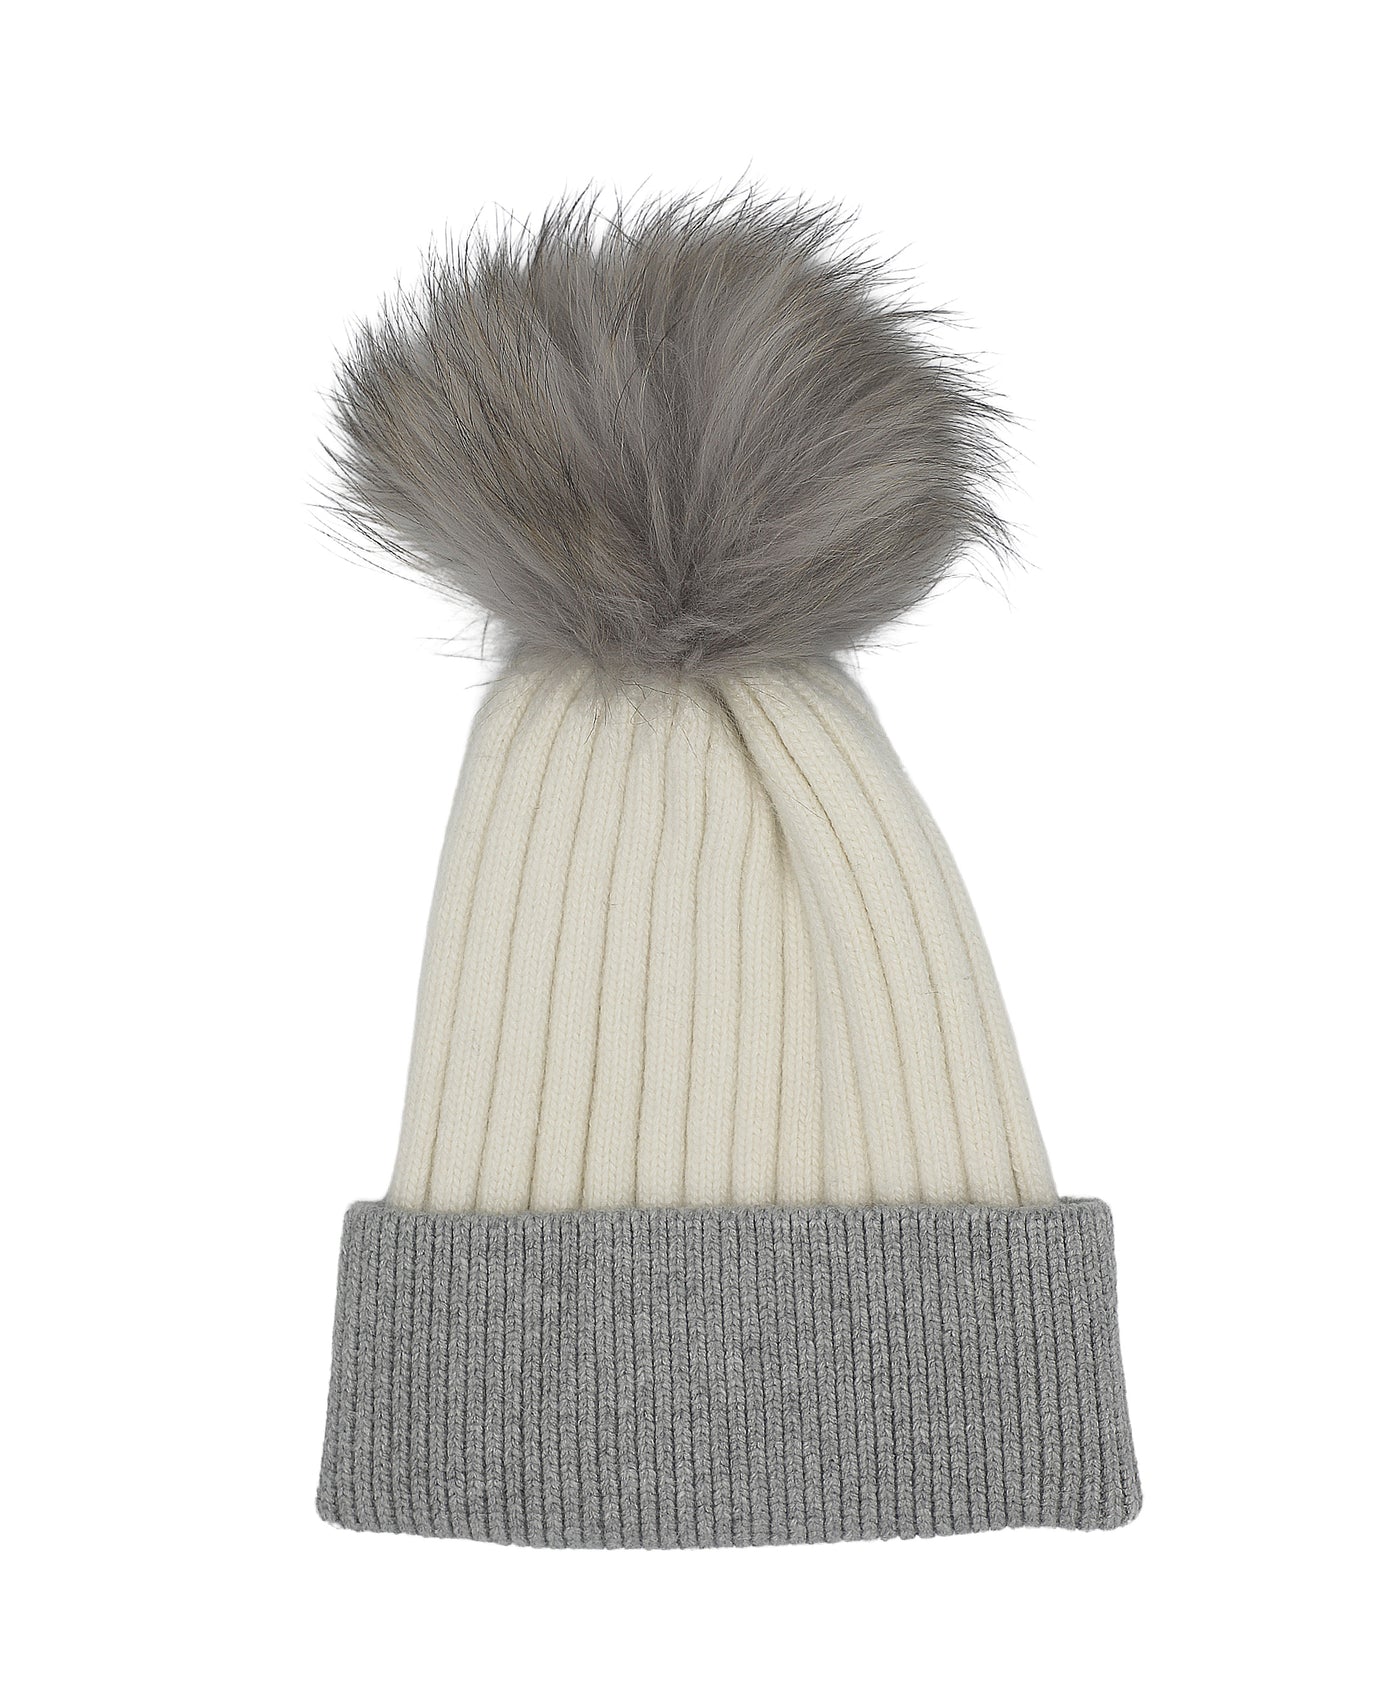 Knit Ribbed Colorblock Hat w/ Fur Pom image 1